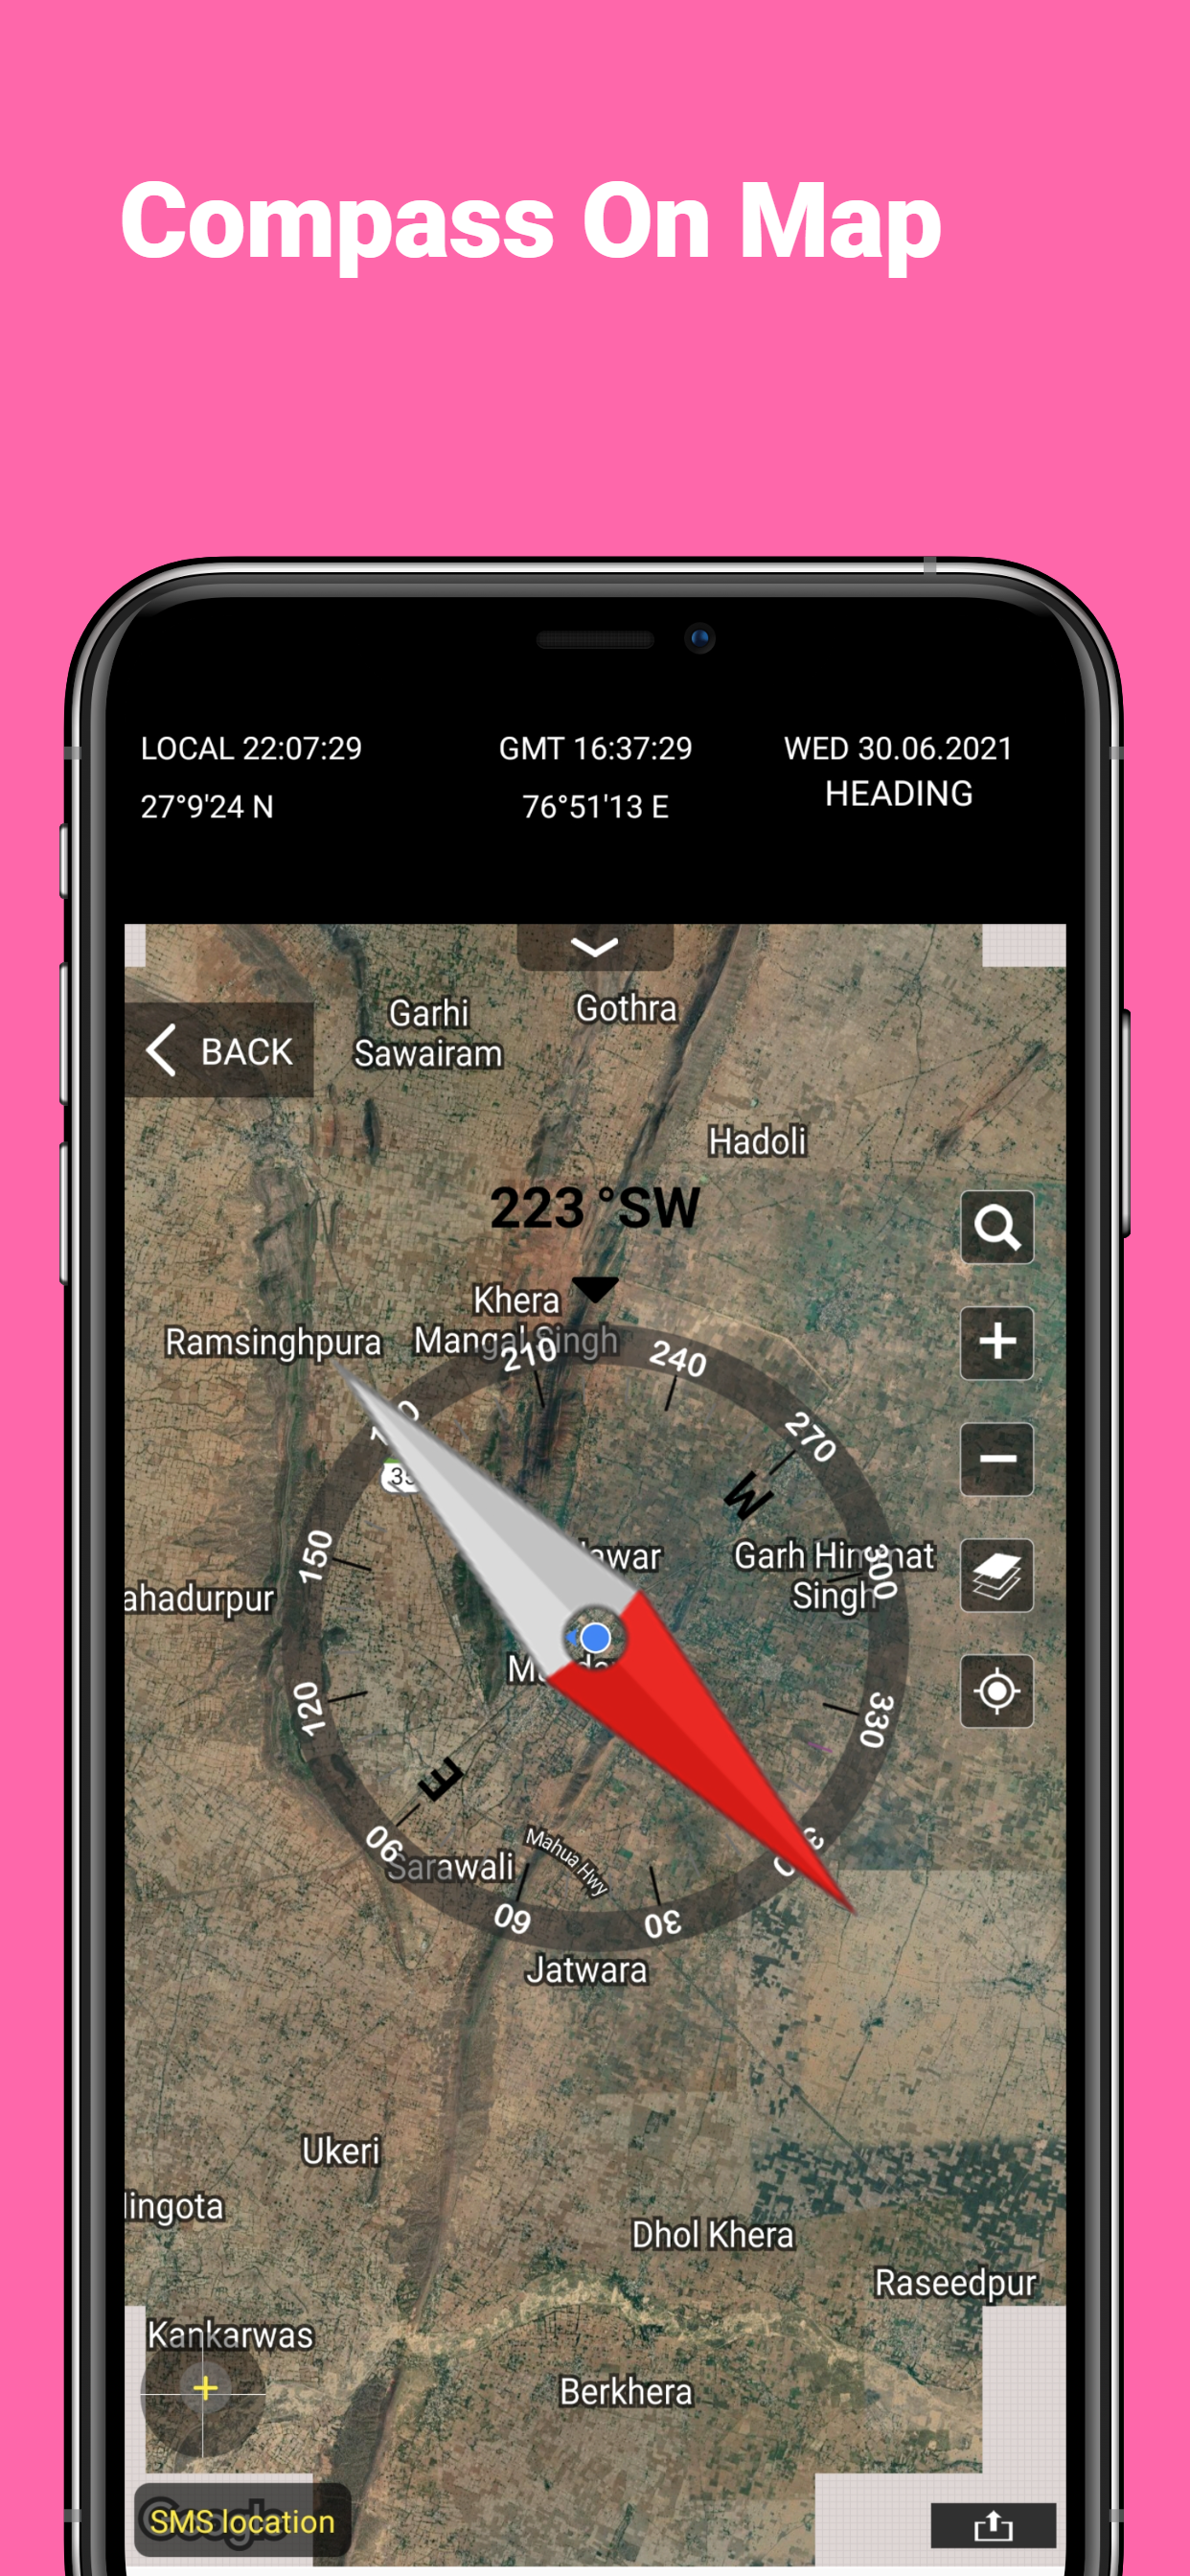 Real Compass – Smart digital Compass App